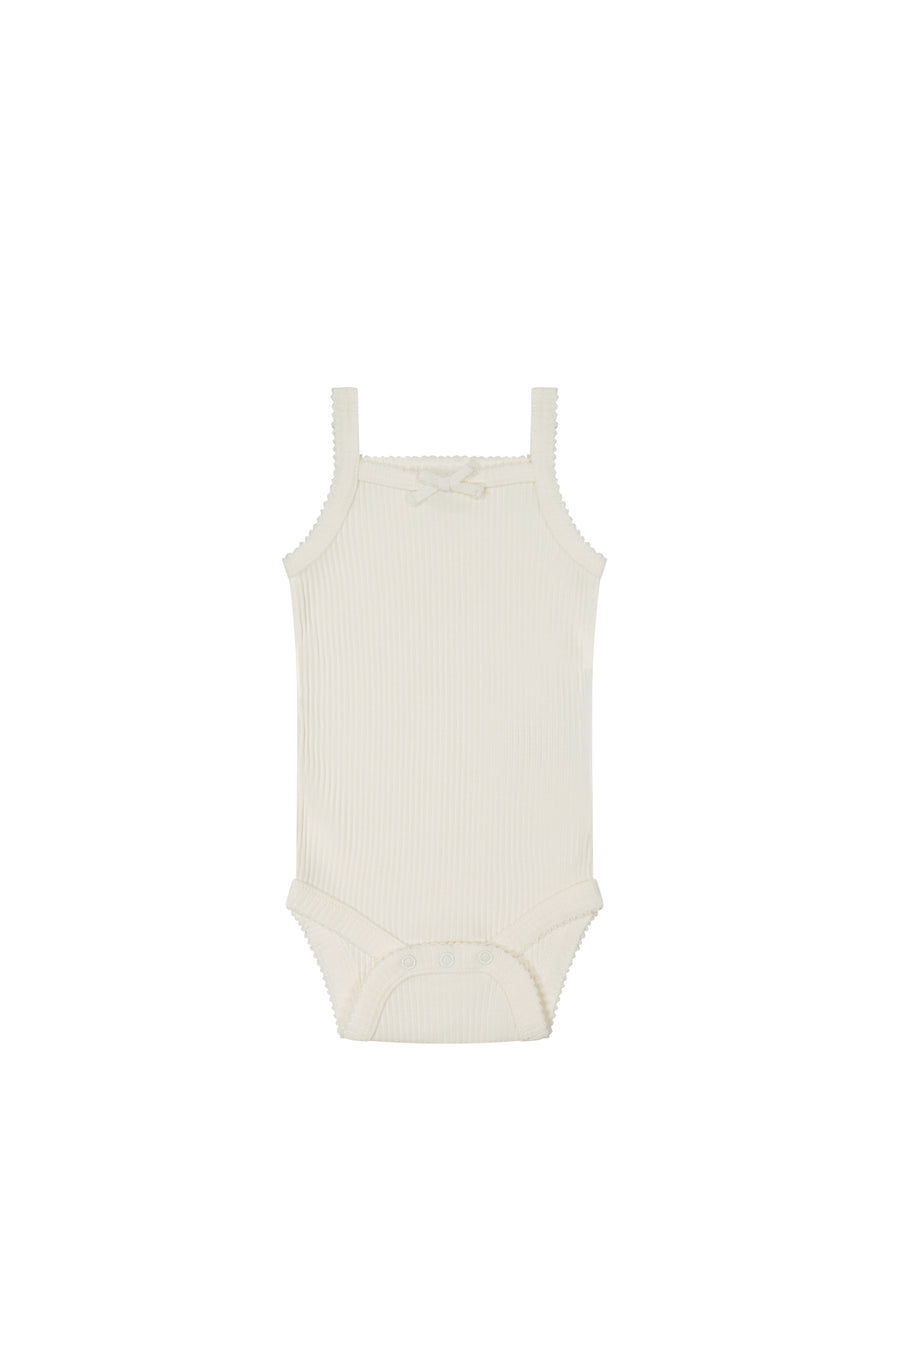 Organic Cotton Modal Singlet Bodysuit  - Milk Childrens Singlet Bodysuit from Jamie Kay NZ